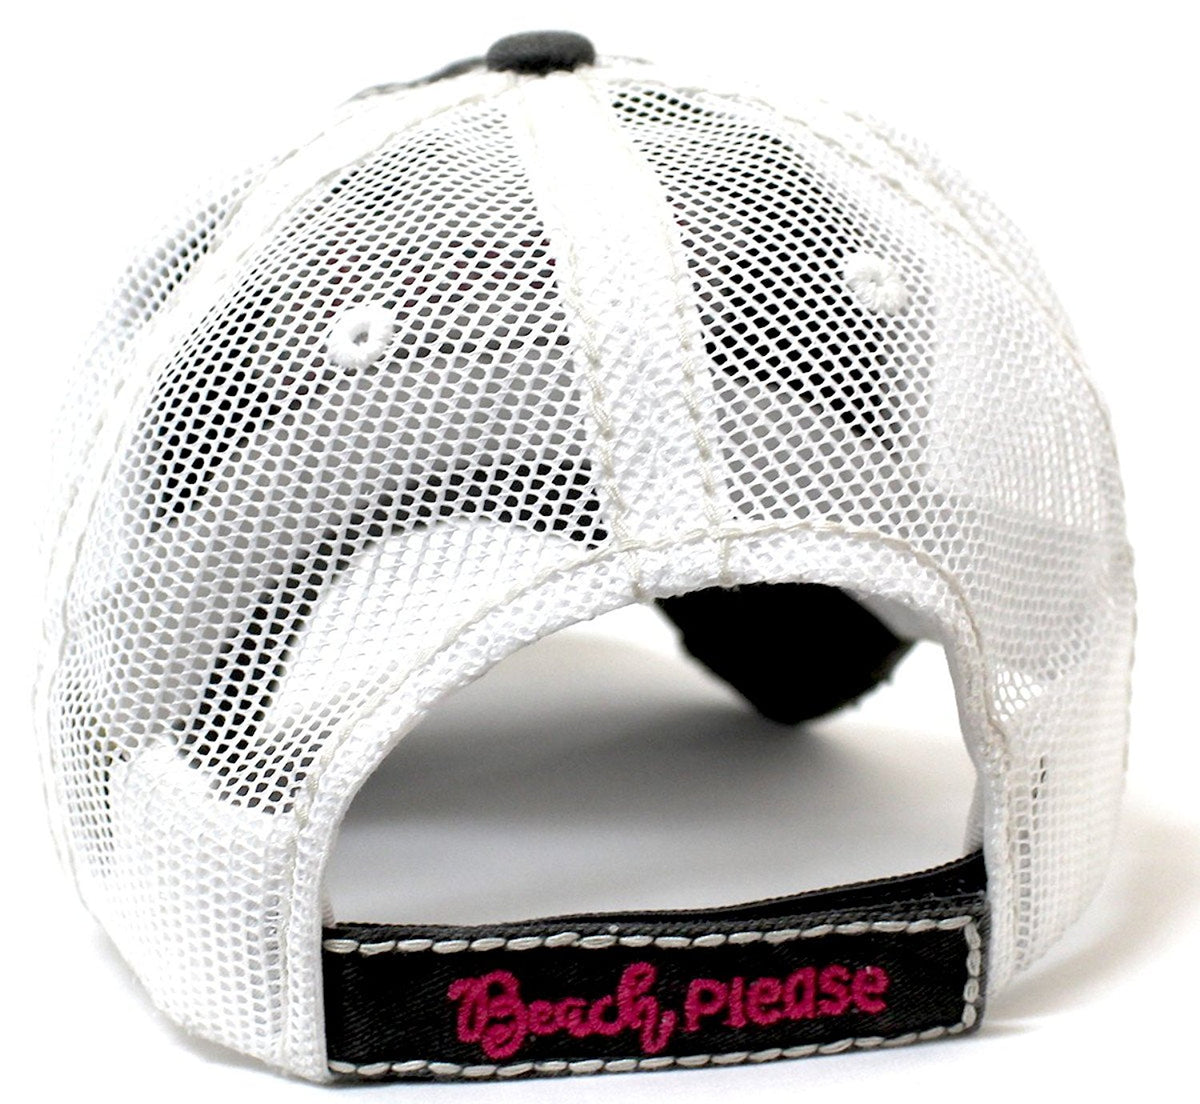 CAPS 'N VINTAGE Women's Beach Please Patch Embroidery Mesh Back Baseball Hat-Blk - Caps 'N Vintage 